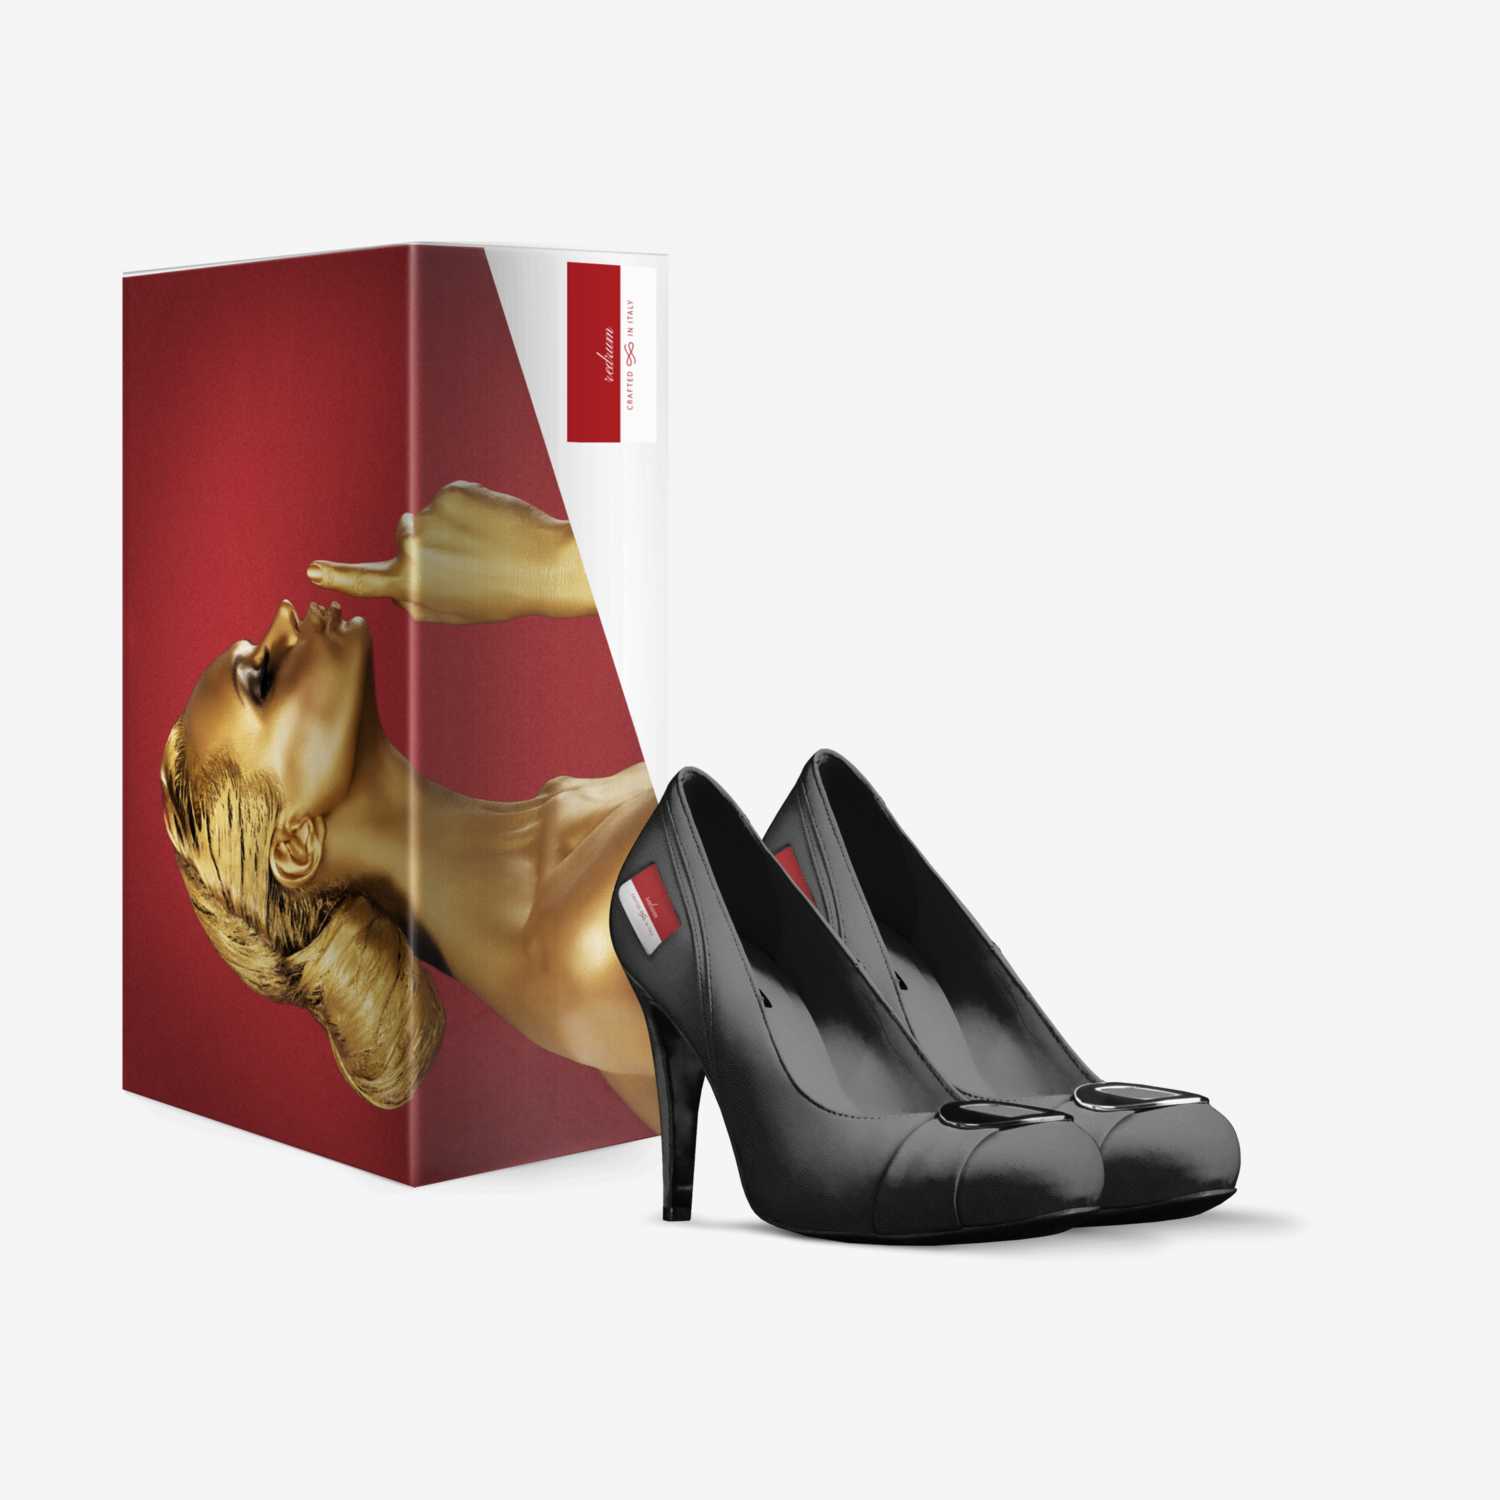 redrum custom made in Italy shoes by Moffatt Gordon | Box view